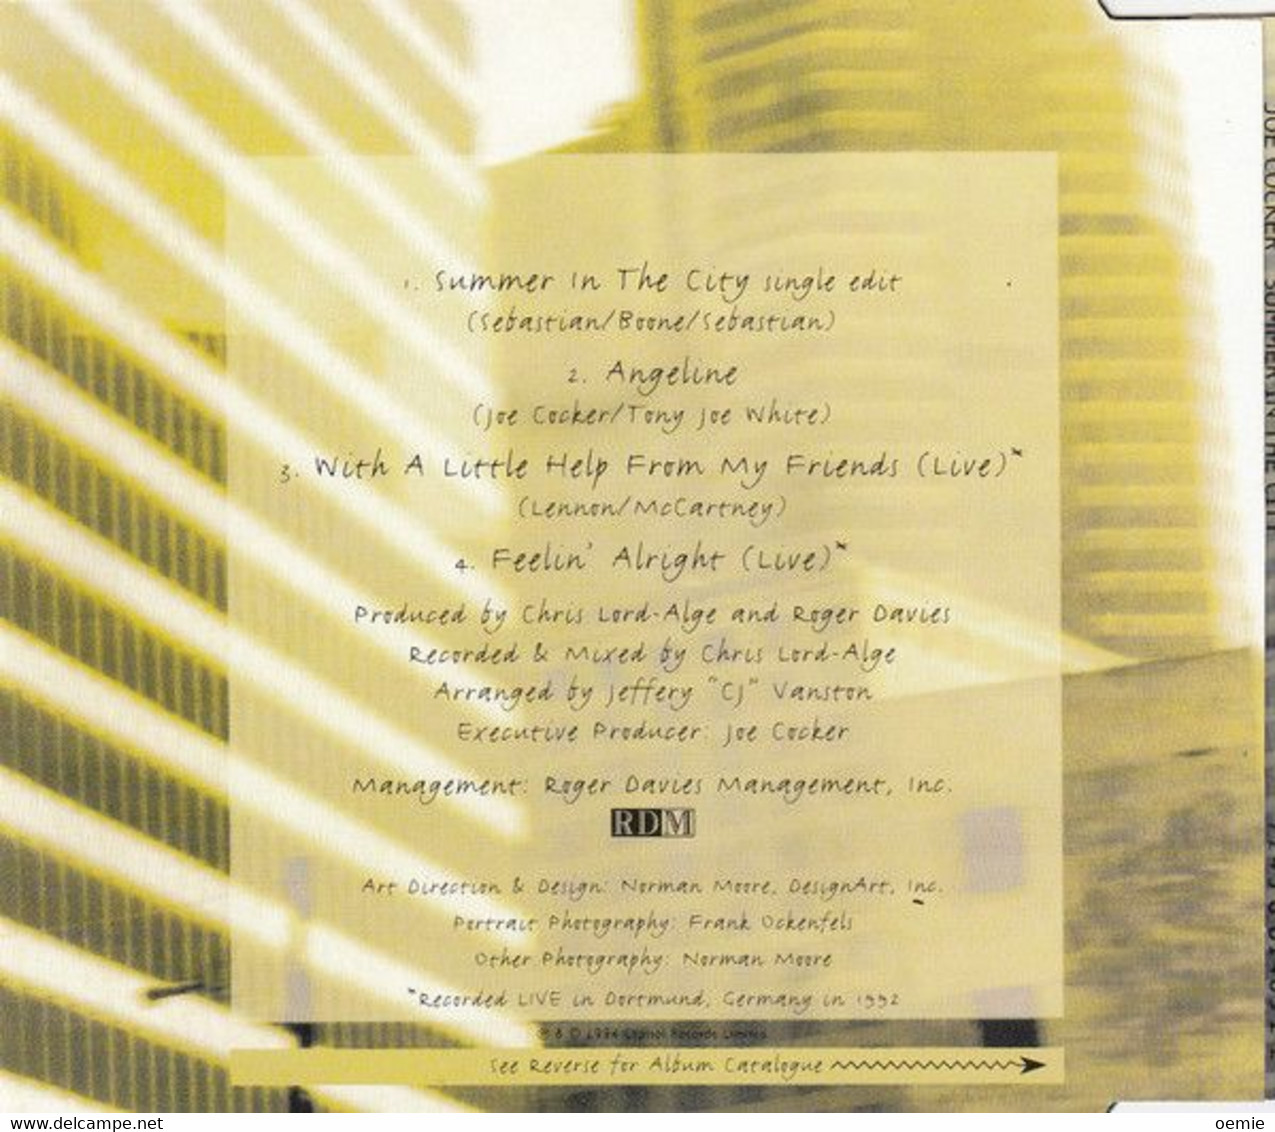 JOE  COCKER   °  SUMMER IN THE CITY    //    CD MAXI   SINGLES   NEUF  SOUS CELOPHANE - Sonstige - Englische Musik